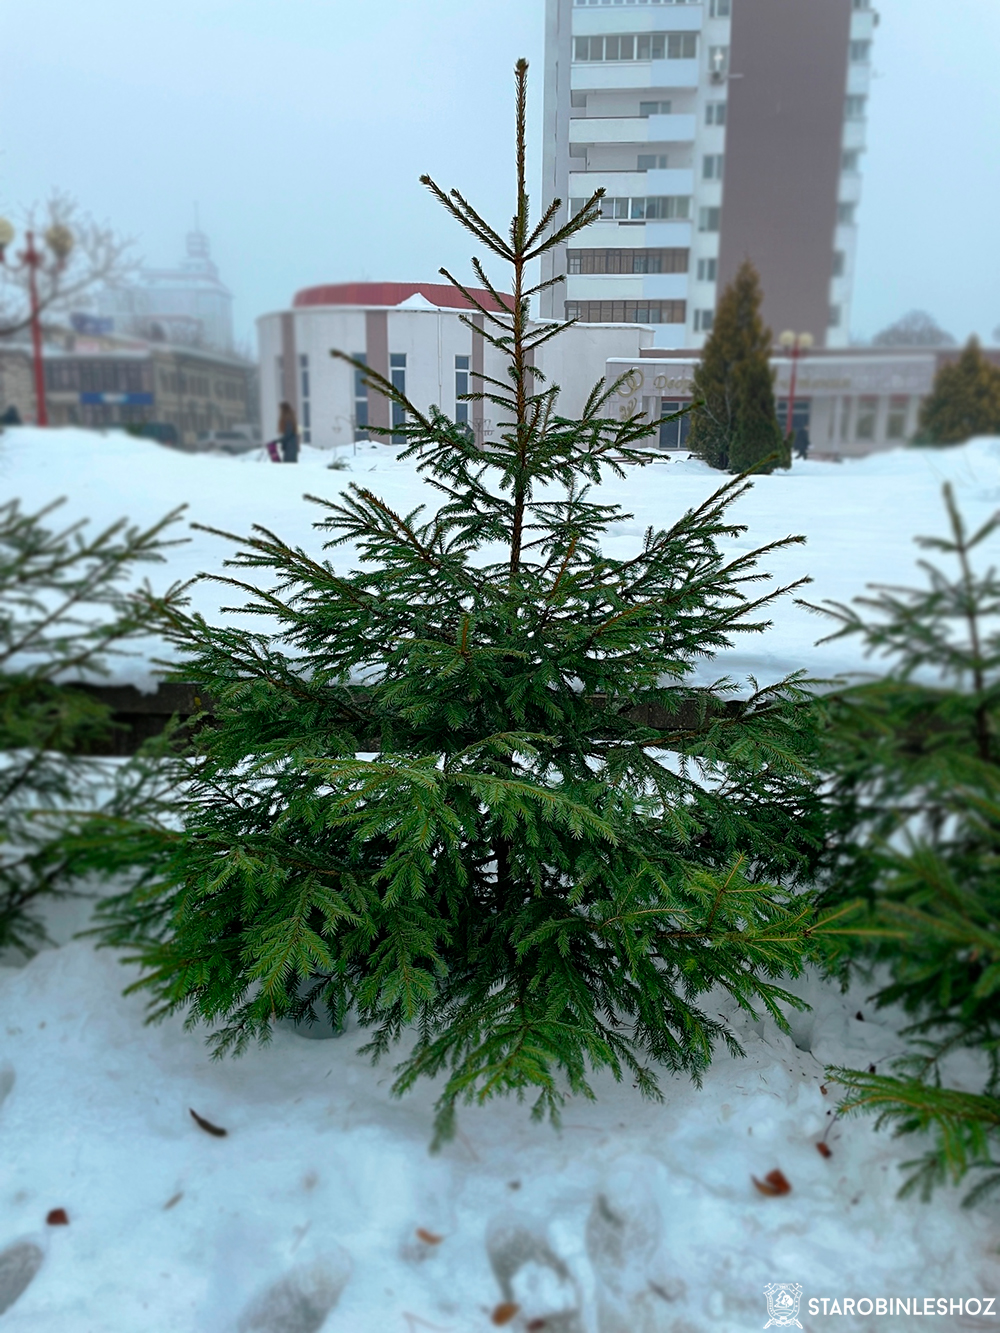 Продажа новогодних деревьев  Старобинский лесхоз